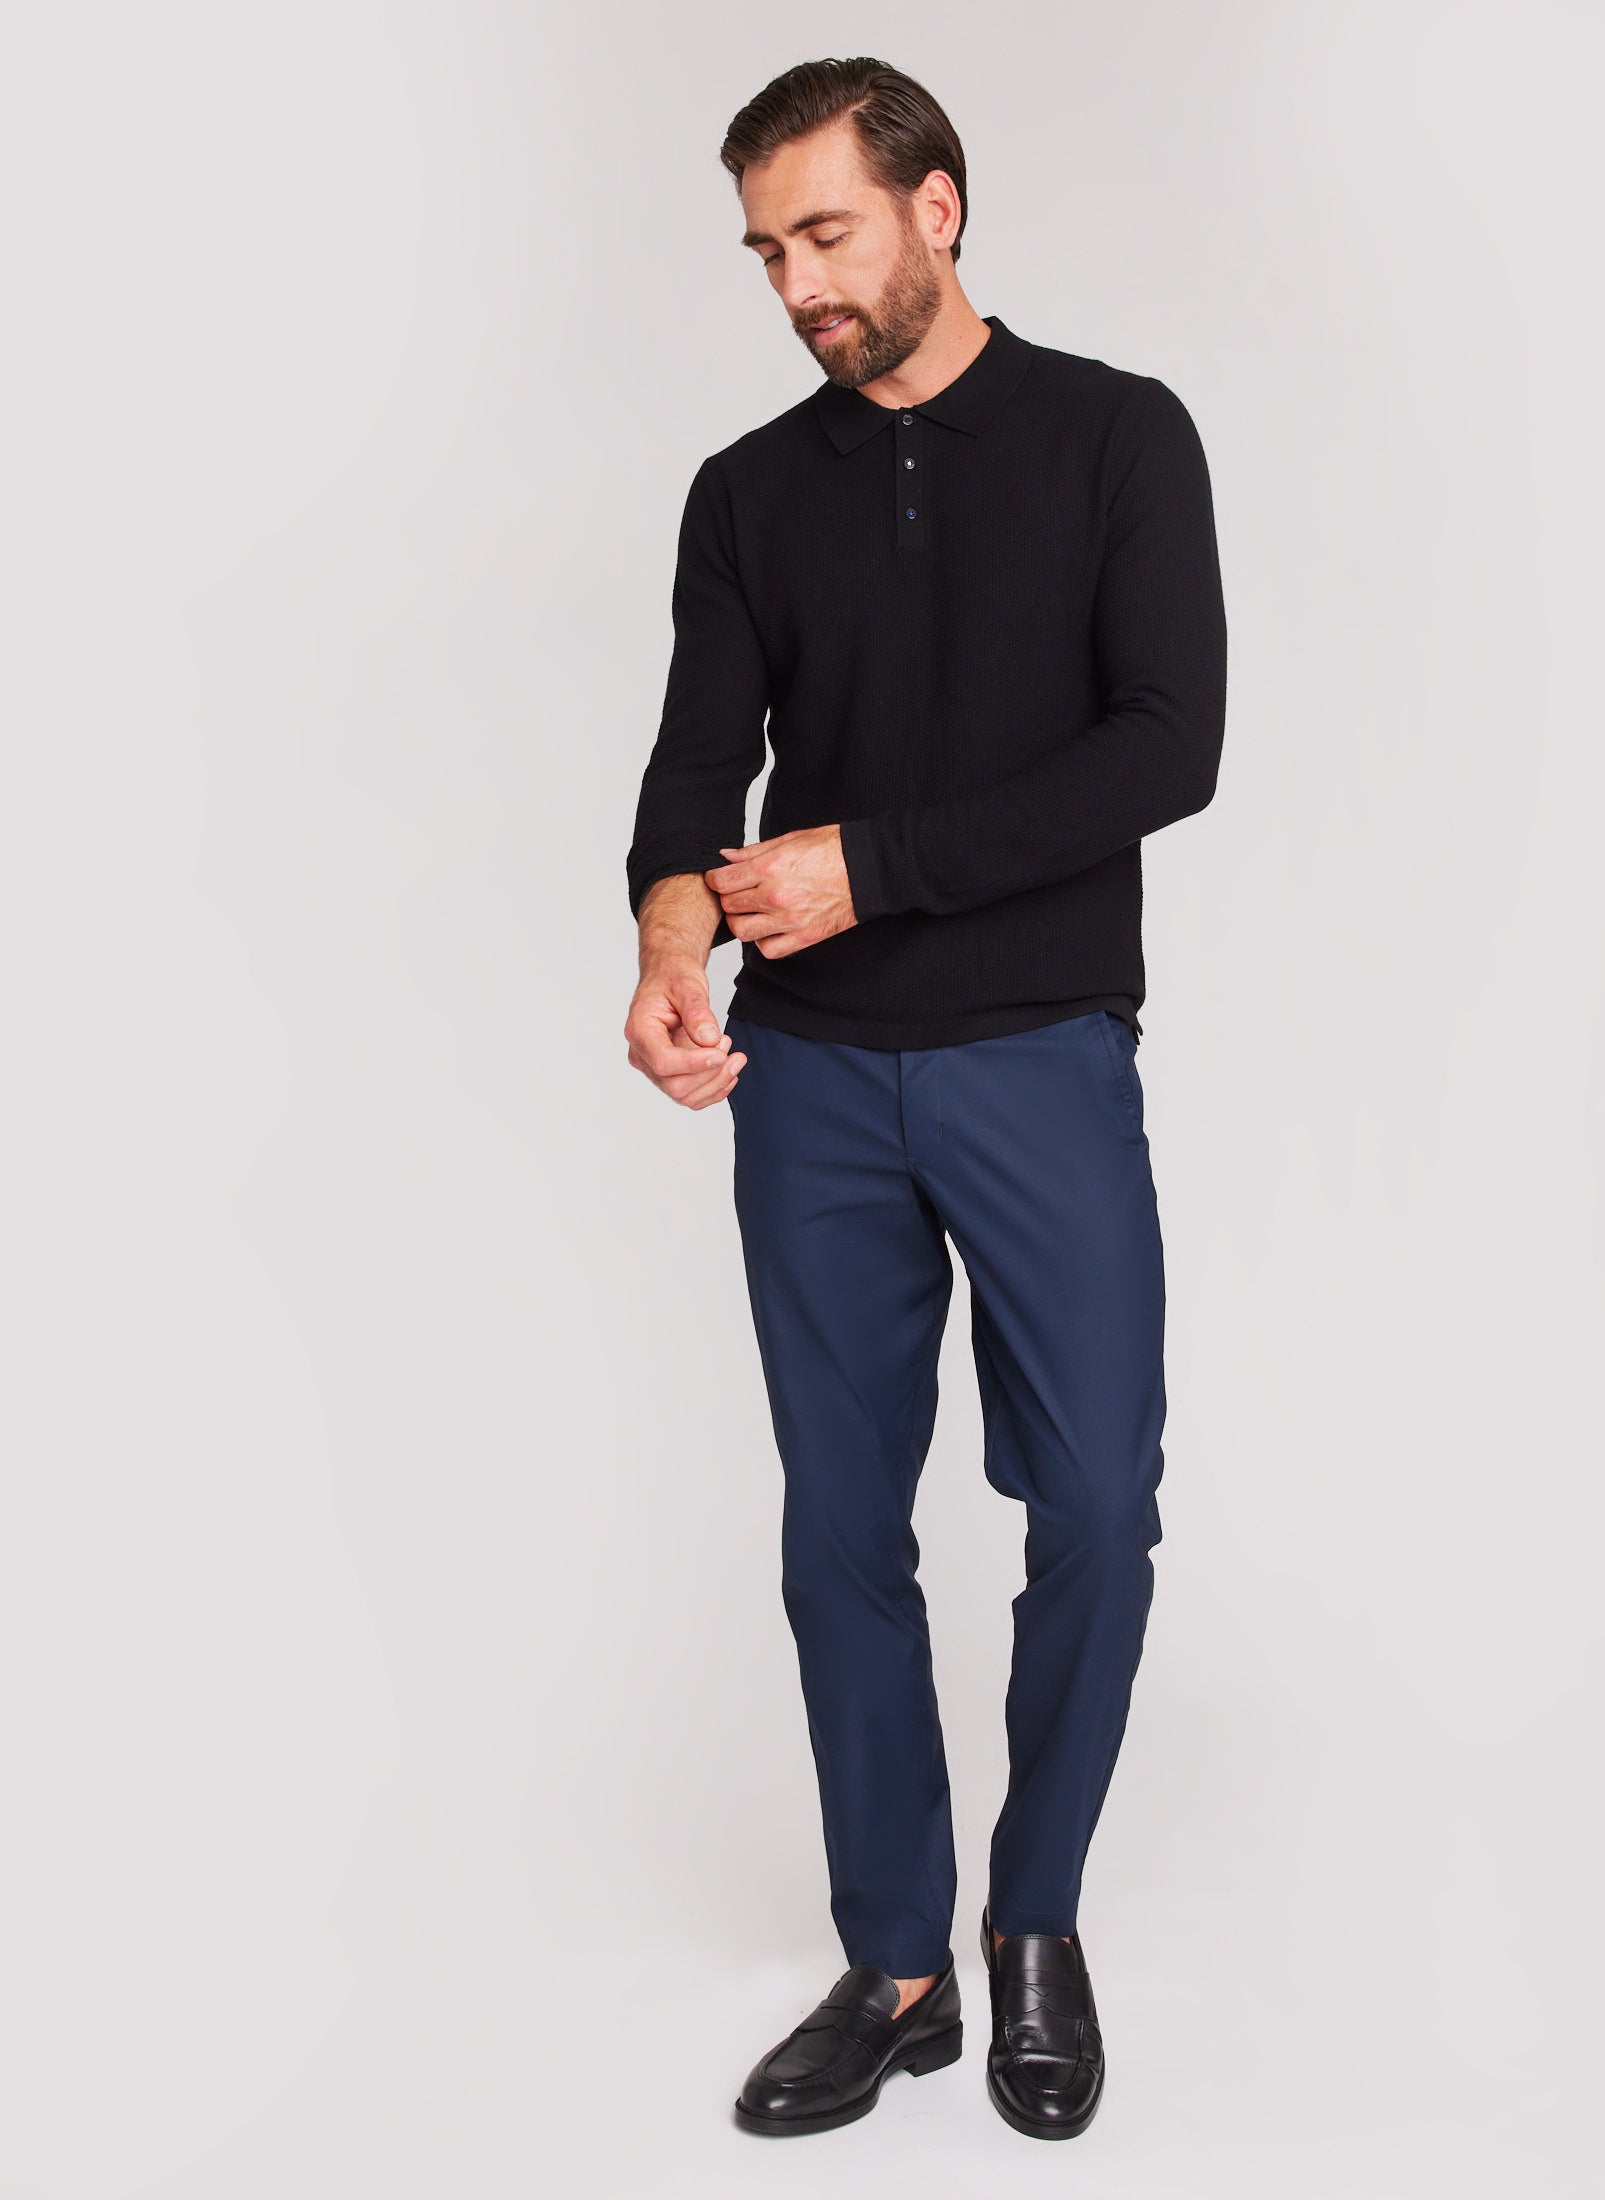 Kit and Ace — Uplift Polo Merino Sweater